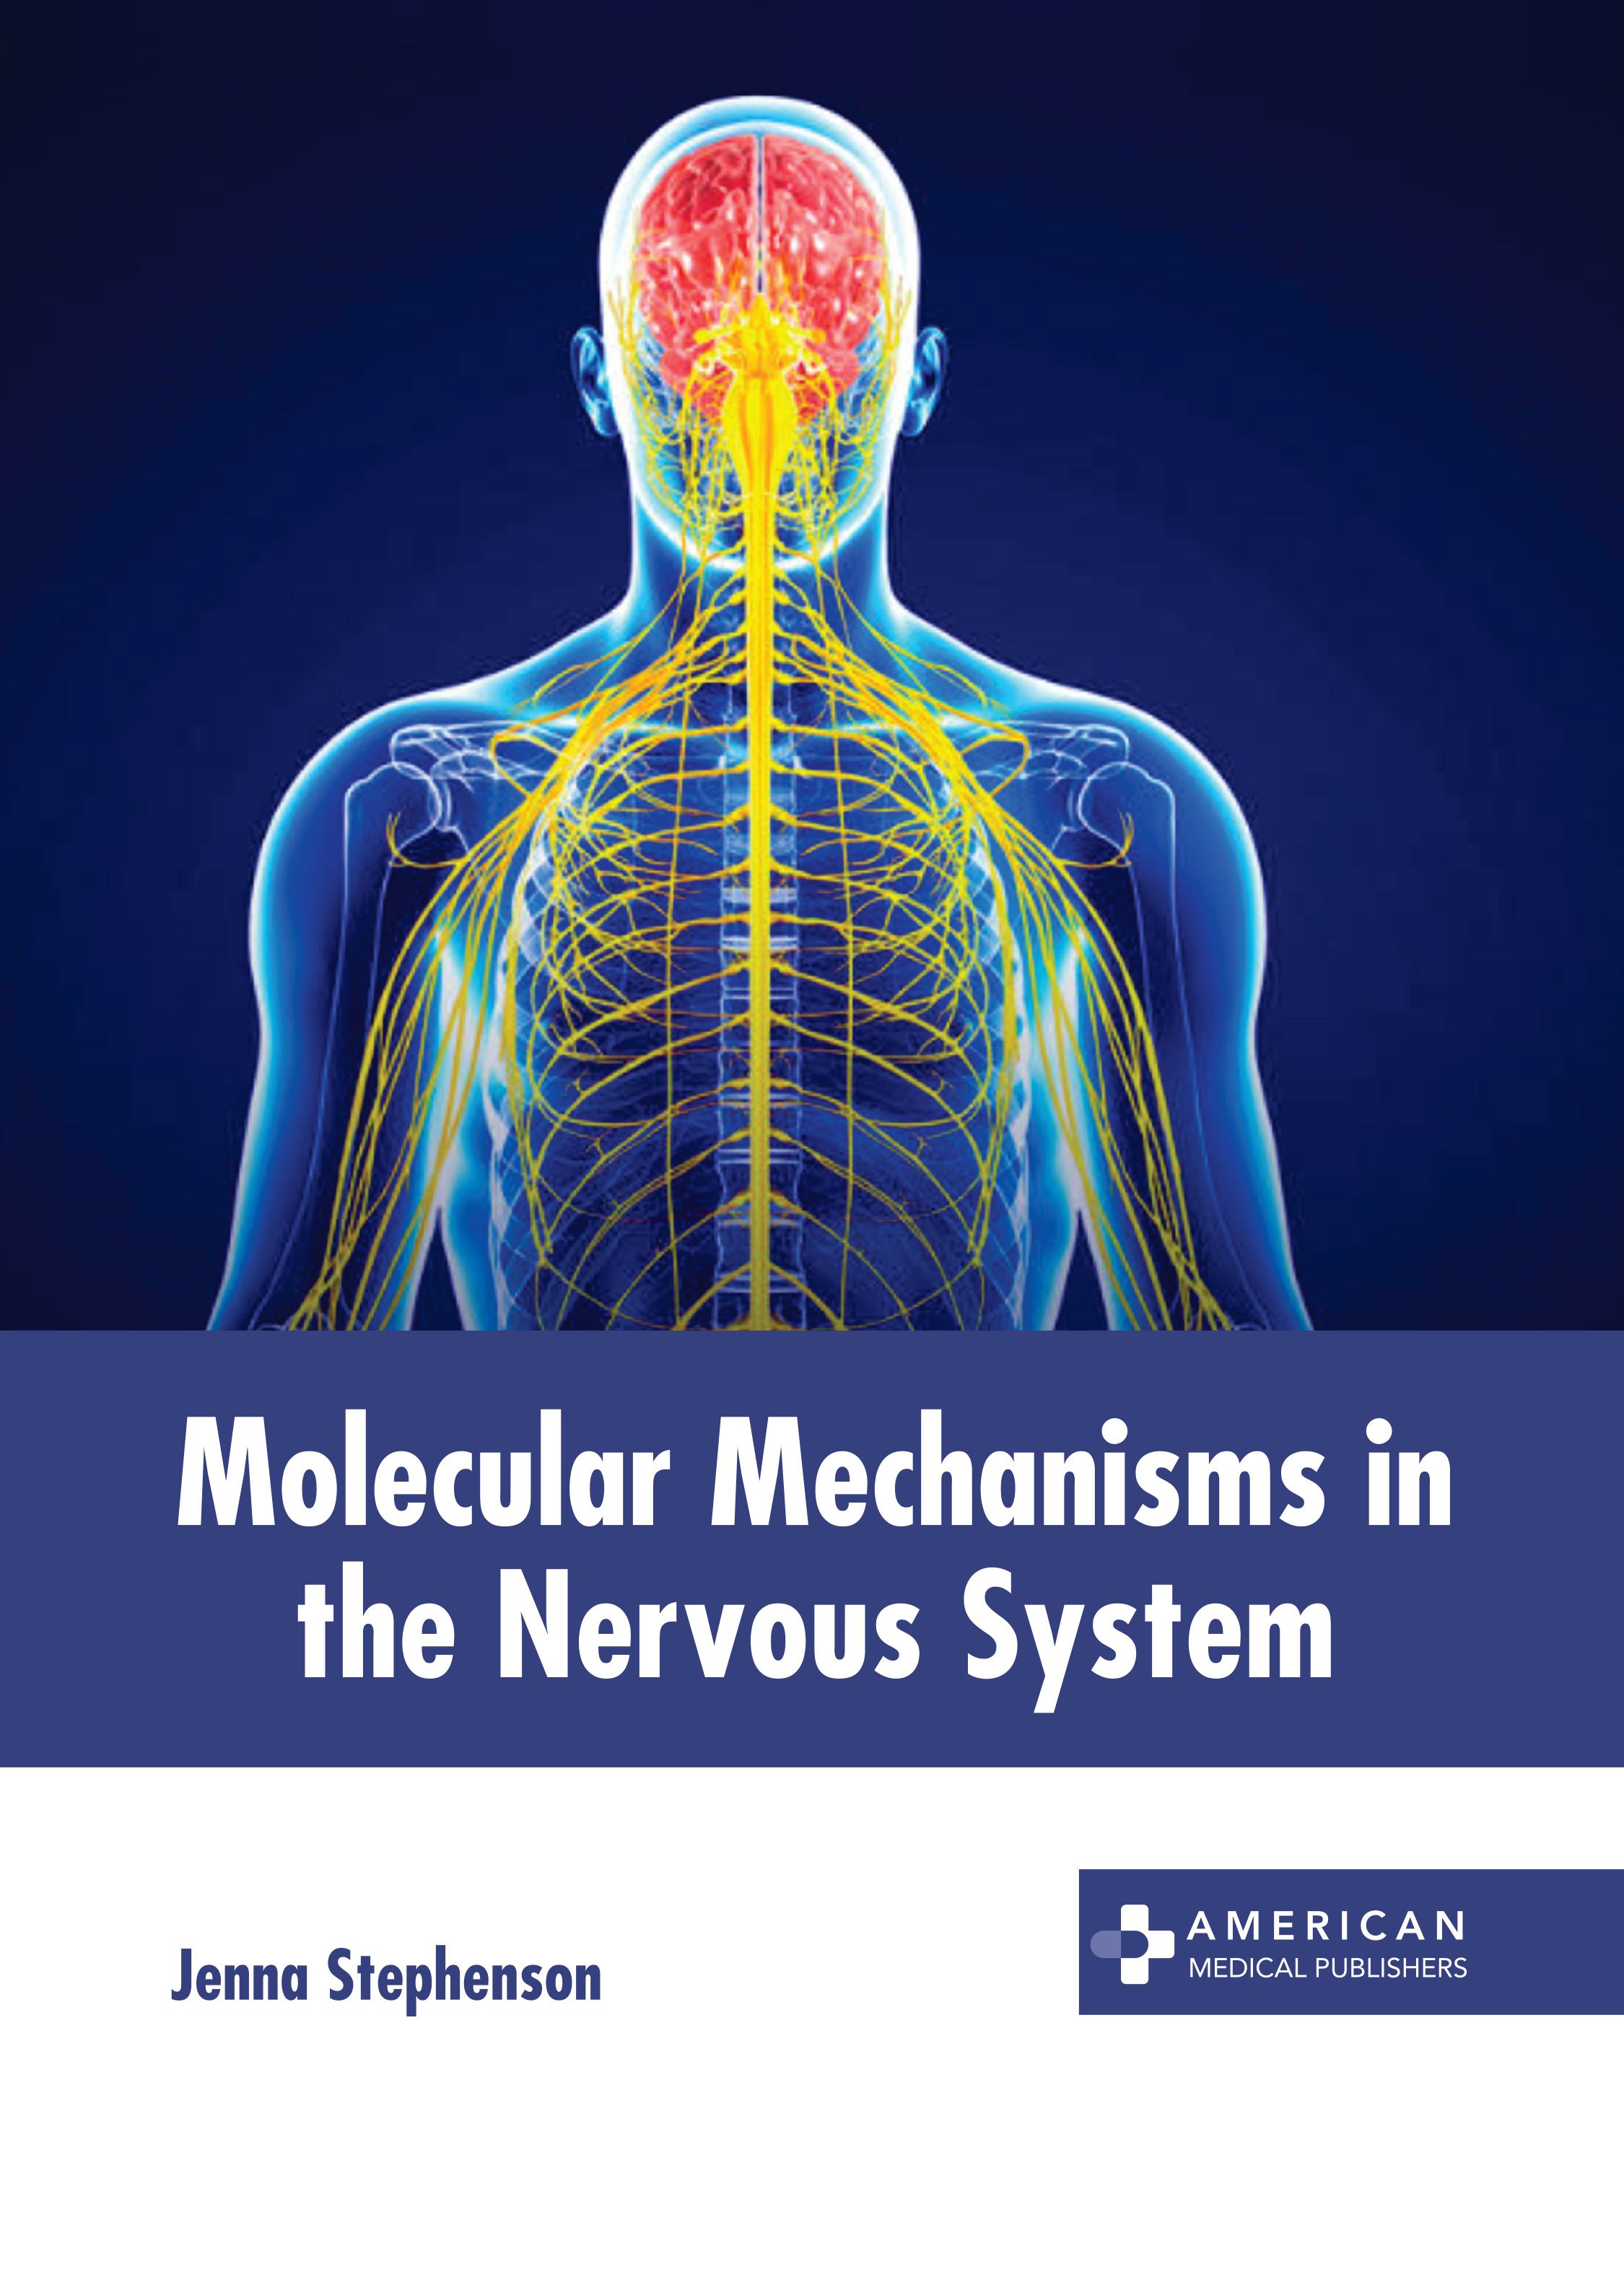 MOLECULAR MECHANISMS IN THE NERVOUS SYSTEM